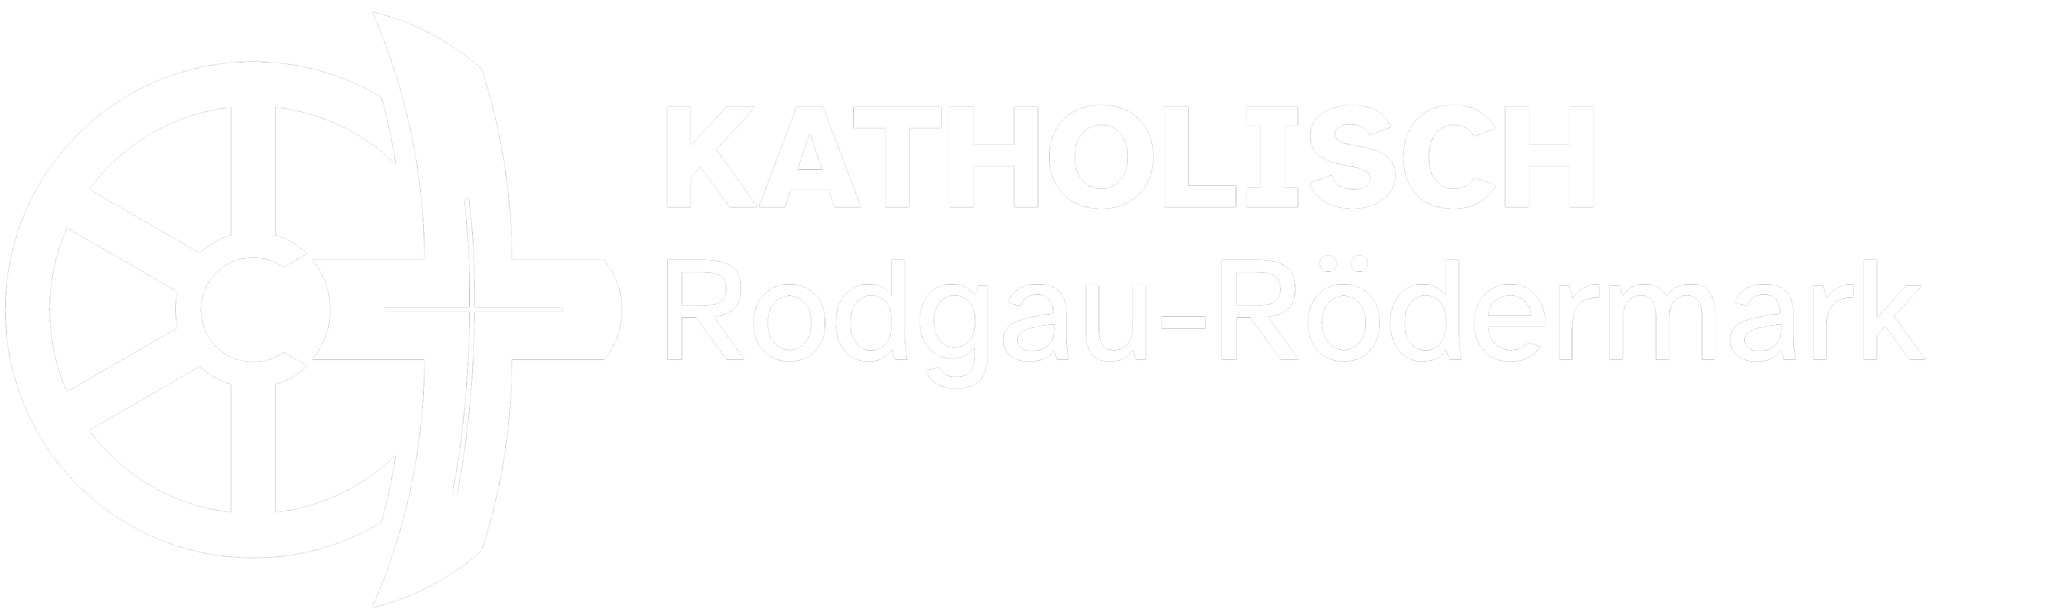 Rodgau-Rödermark_rgb_weiss-gross